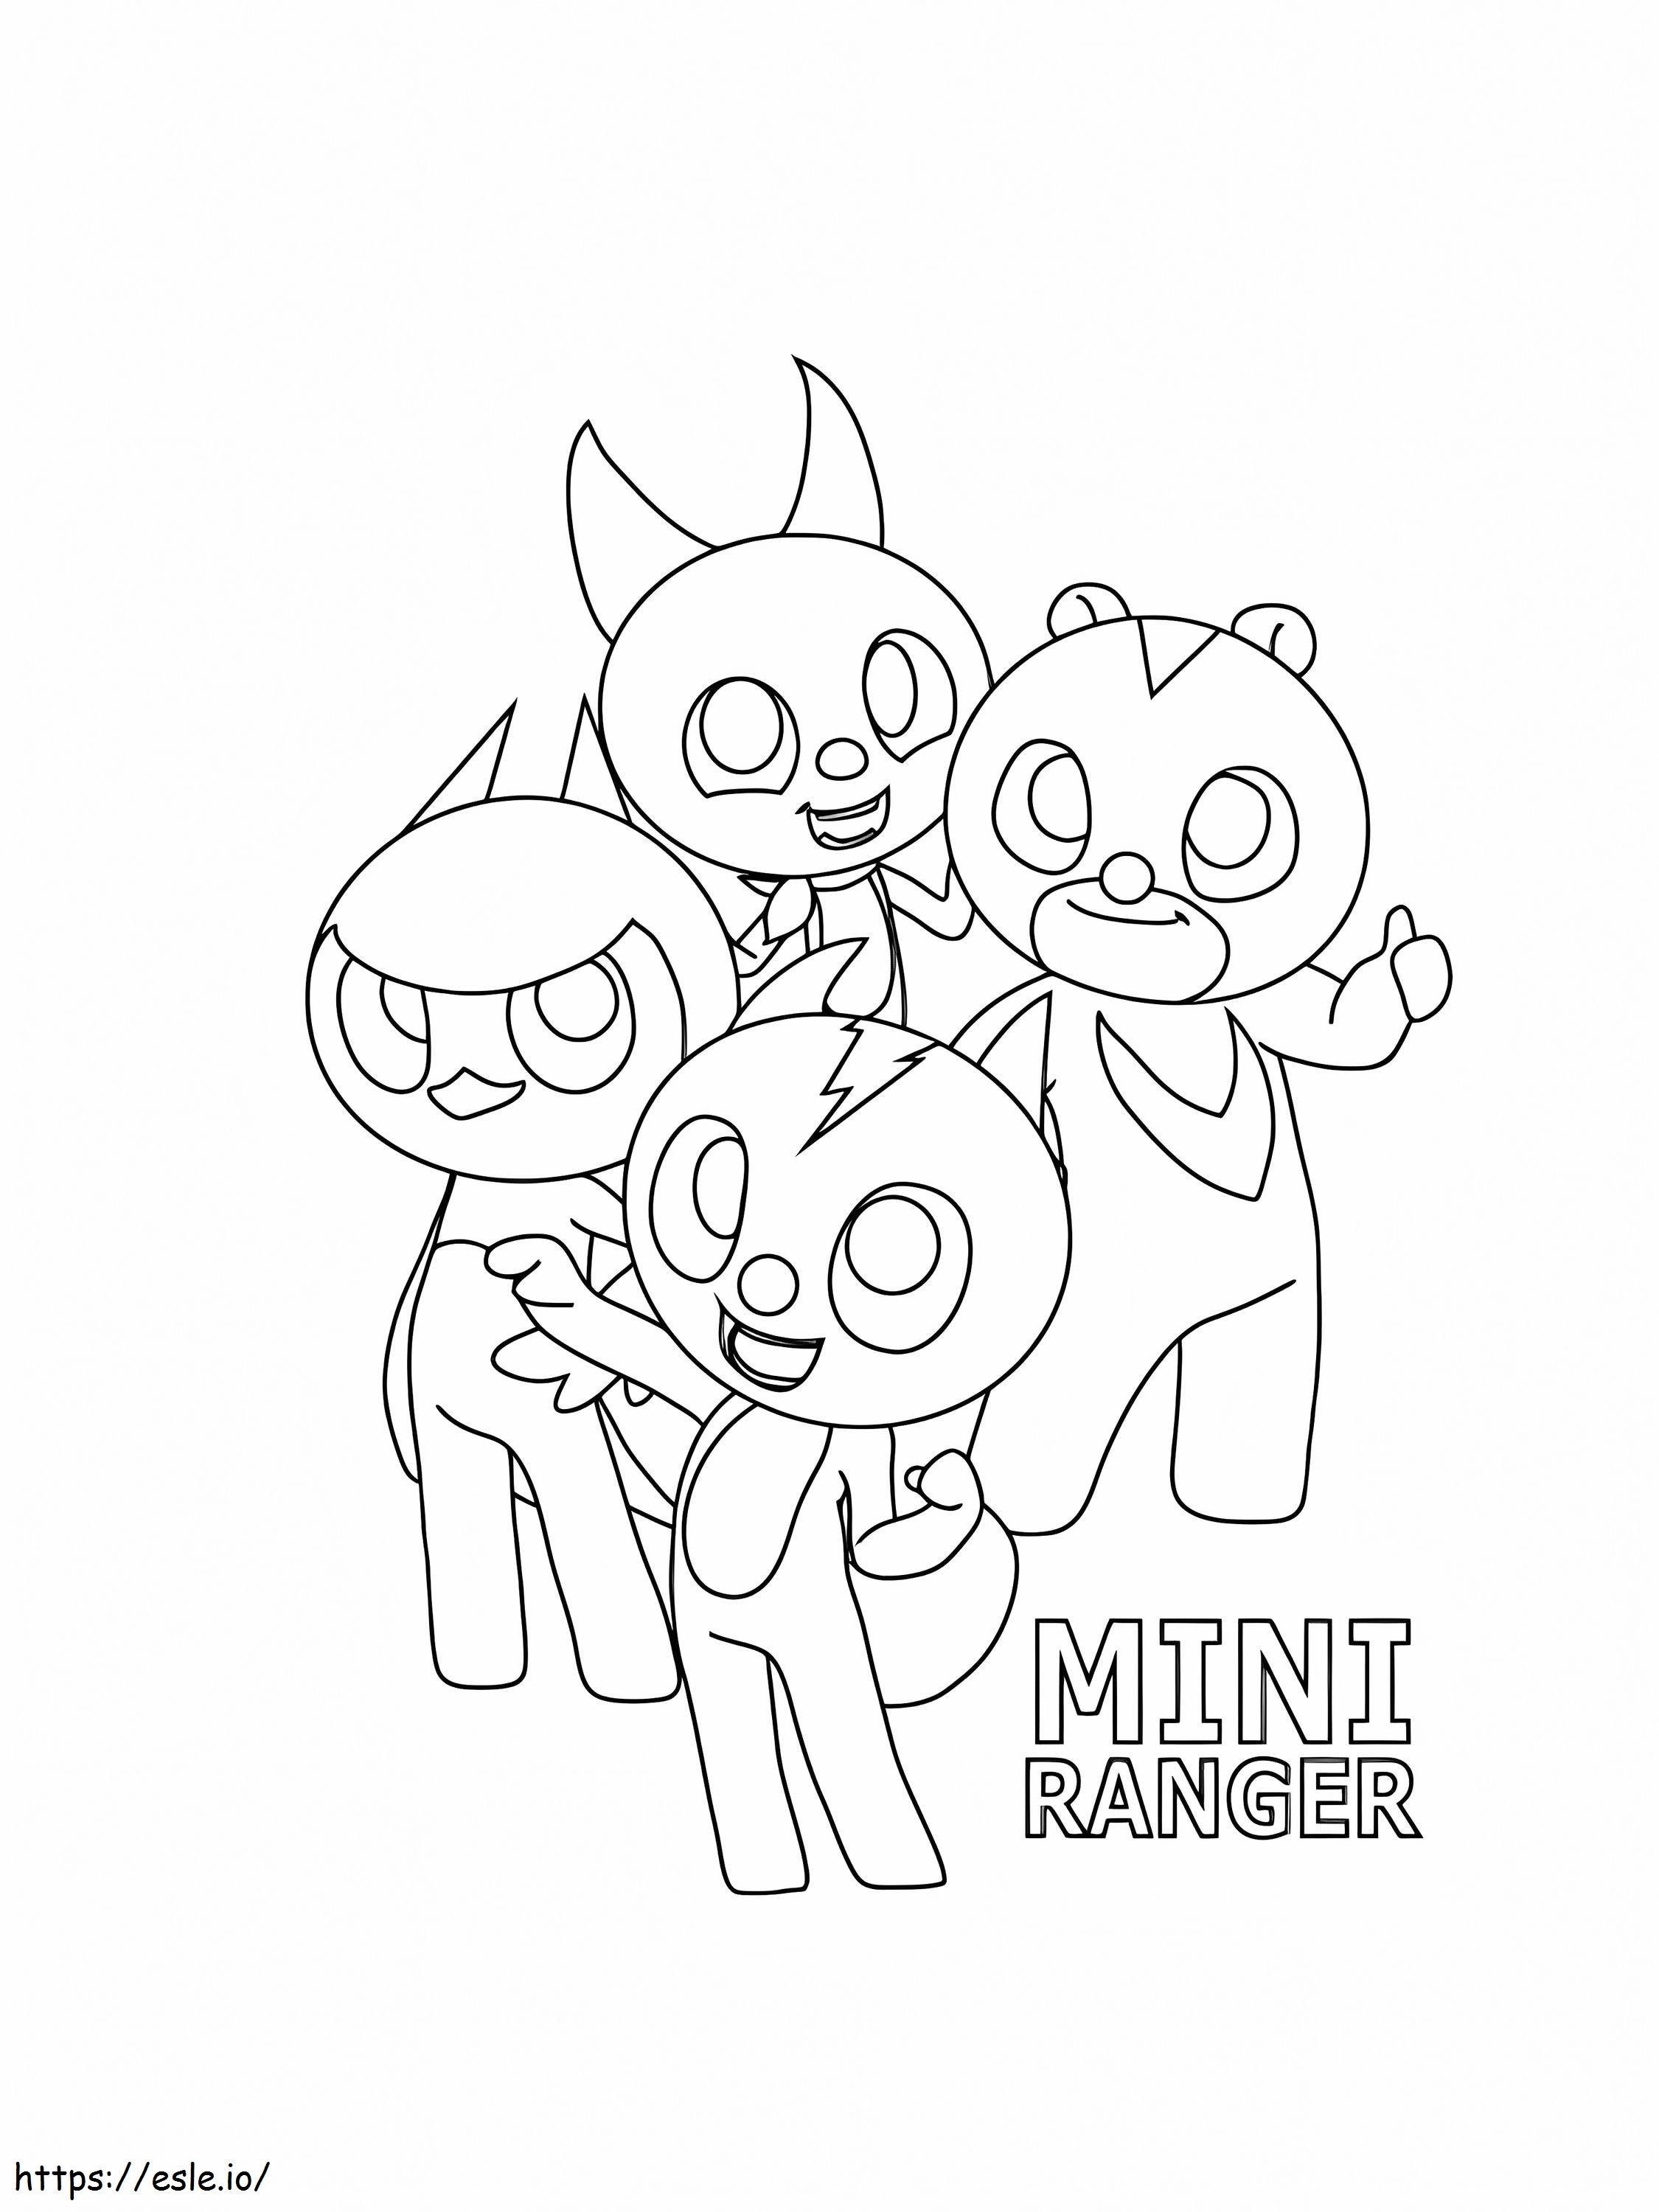 Personajes de Miniforce 1 para colorear